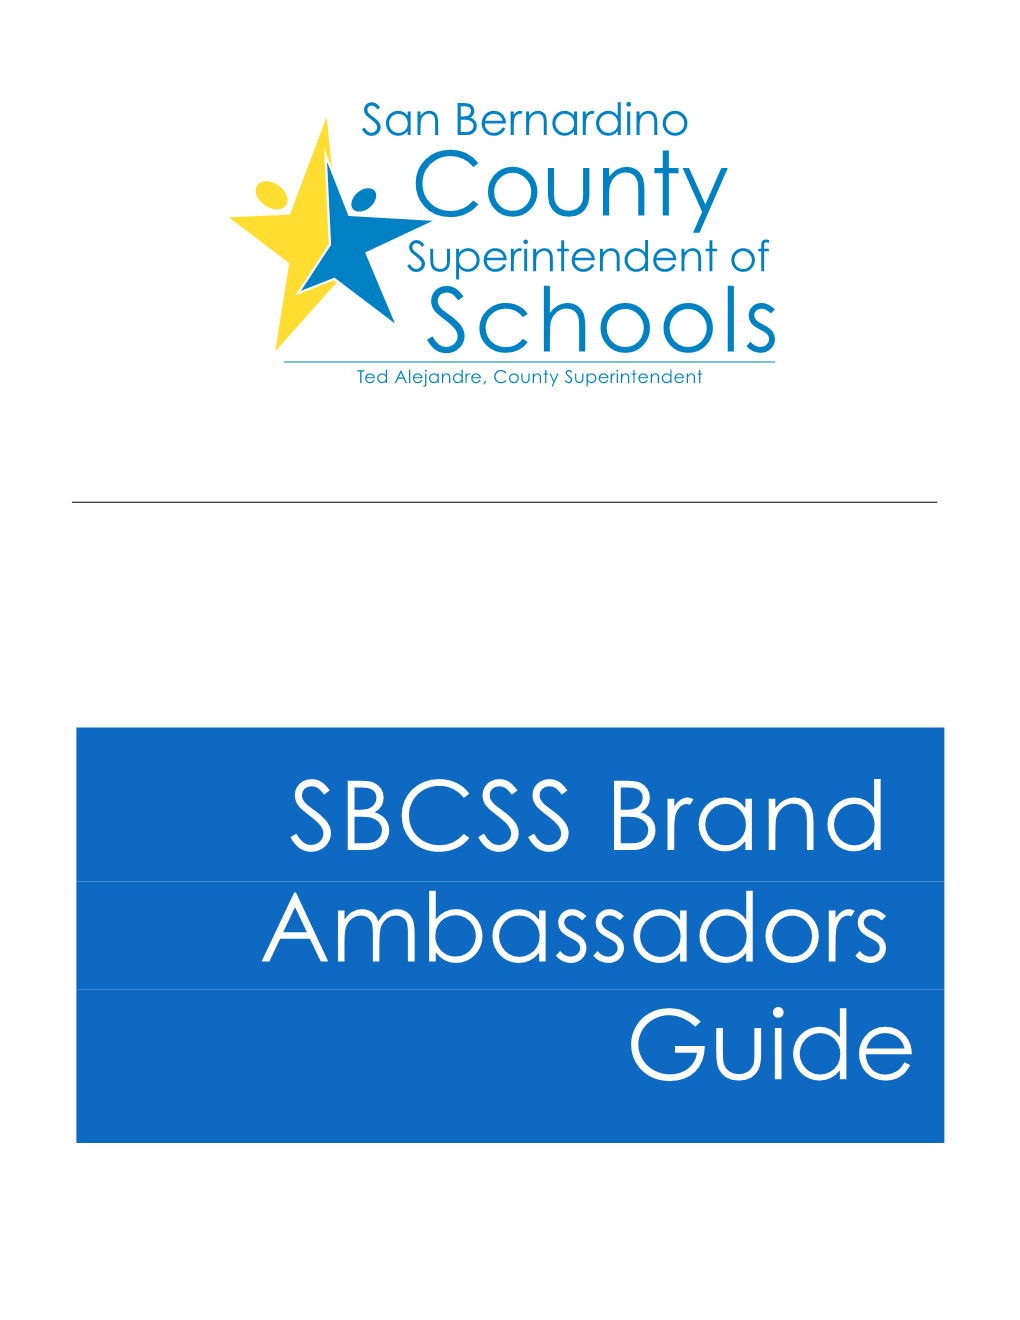 SBCSS Brand Ambassadors Guide